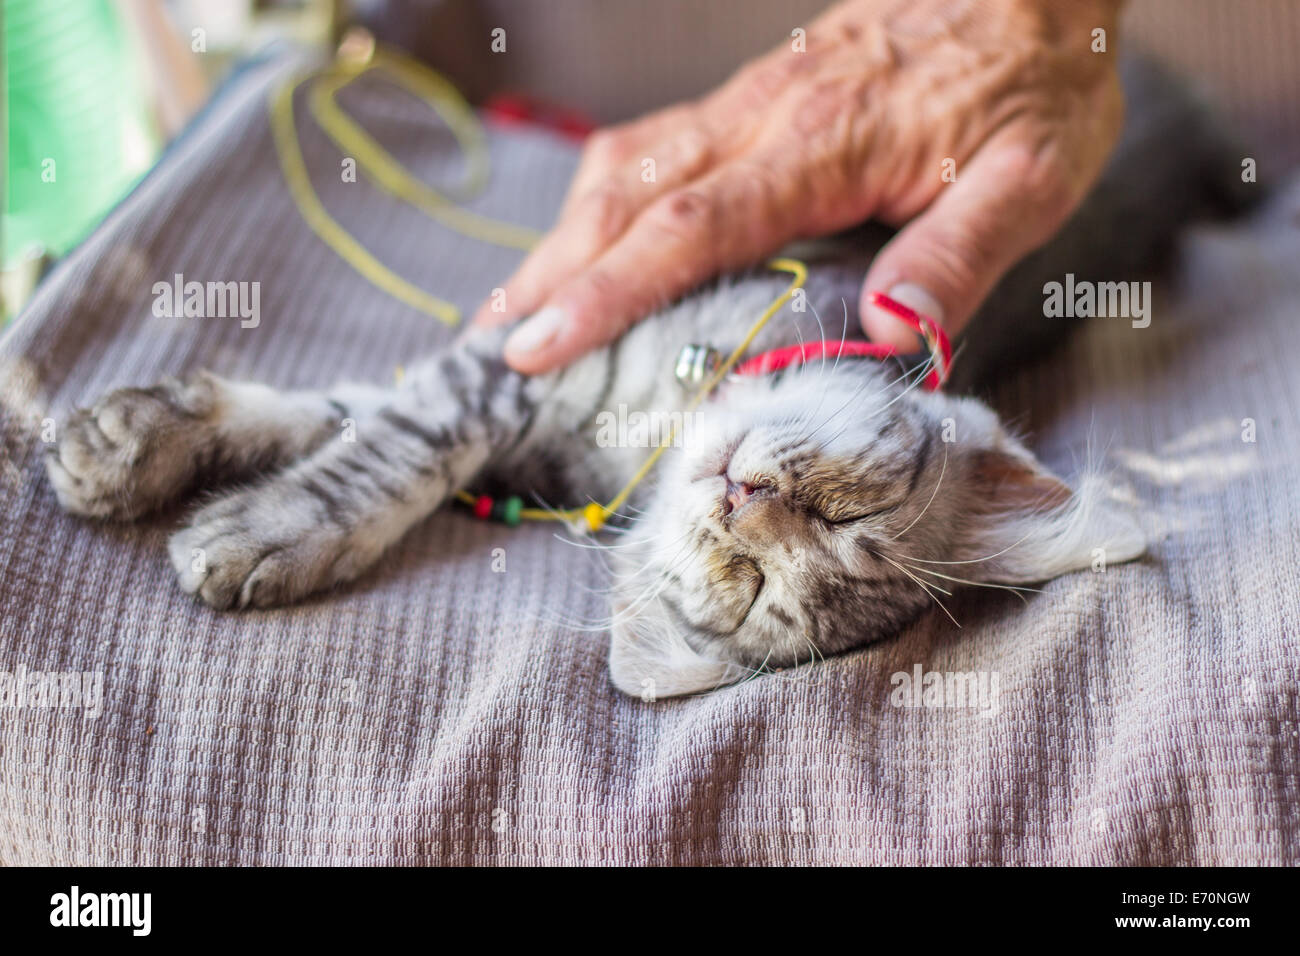 kitty cat face portrait sleeping hand touching Stock Photo